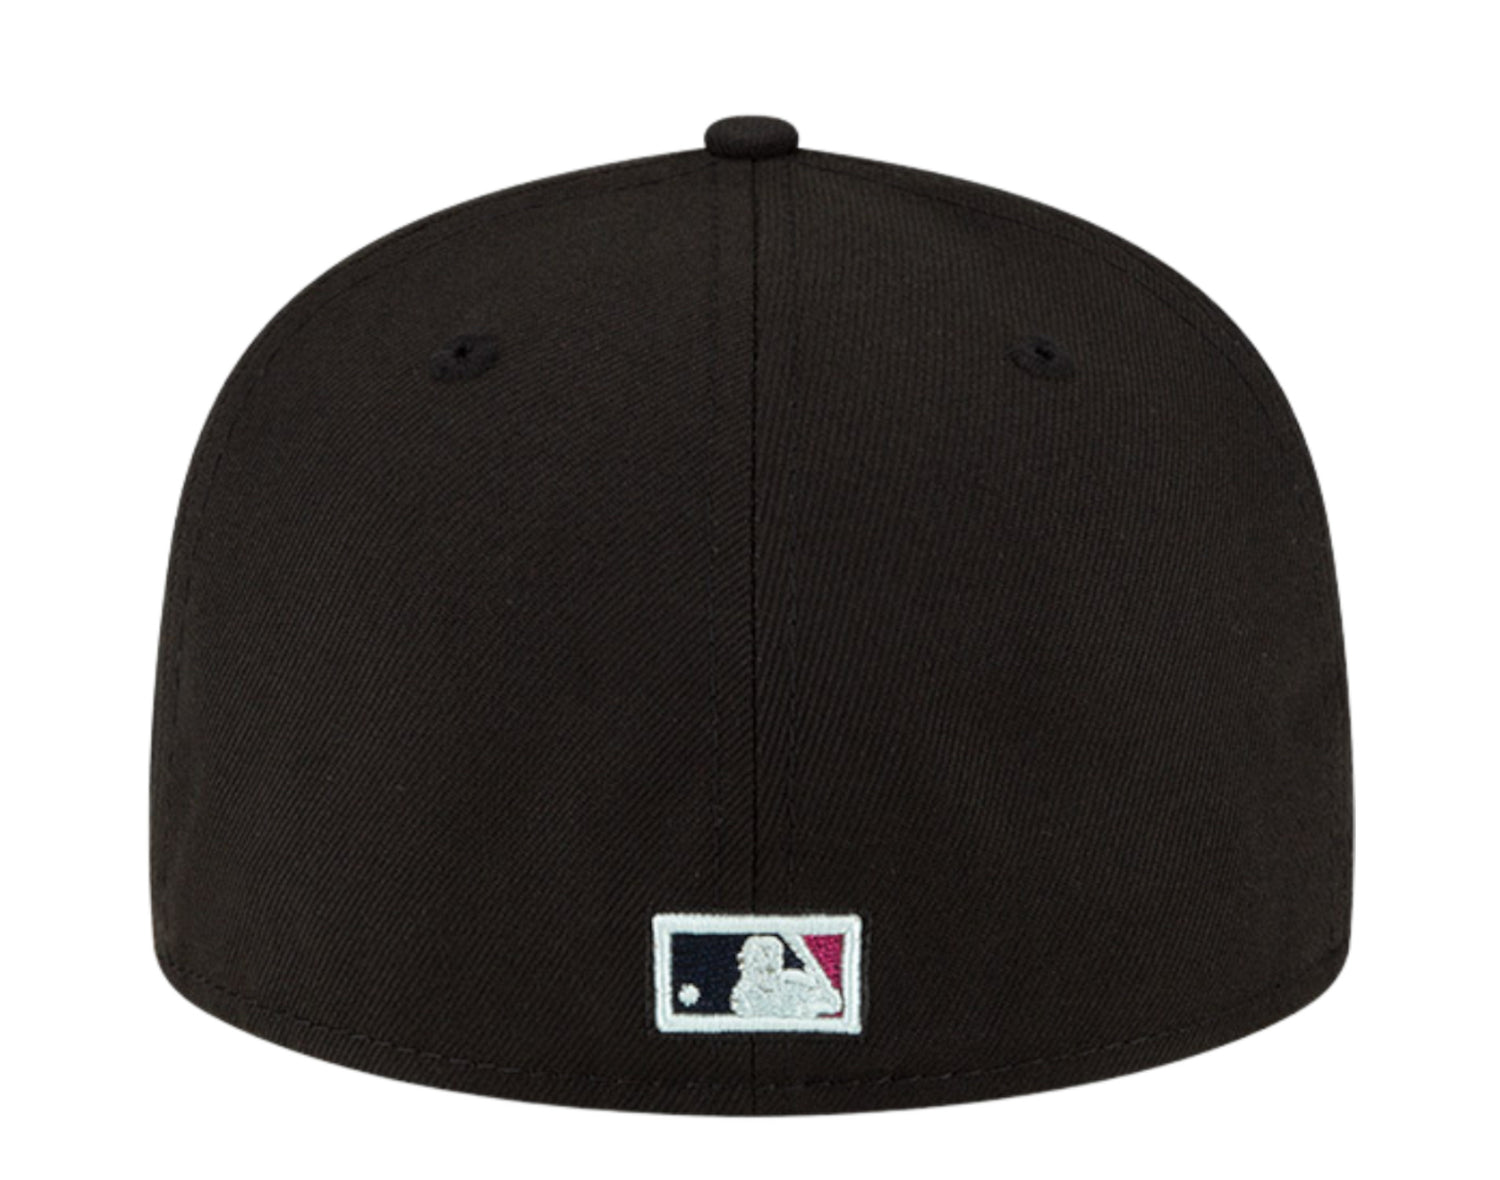 New Era 59Fifty MLB Arizona Diamondbacks Polar Lights Fitted Hat